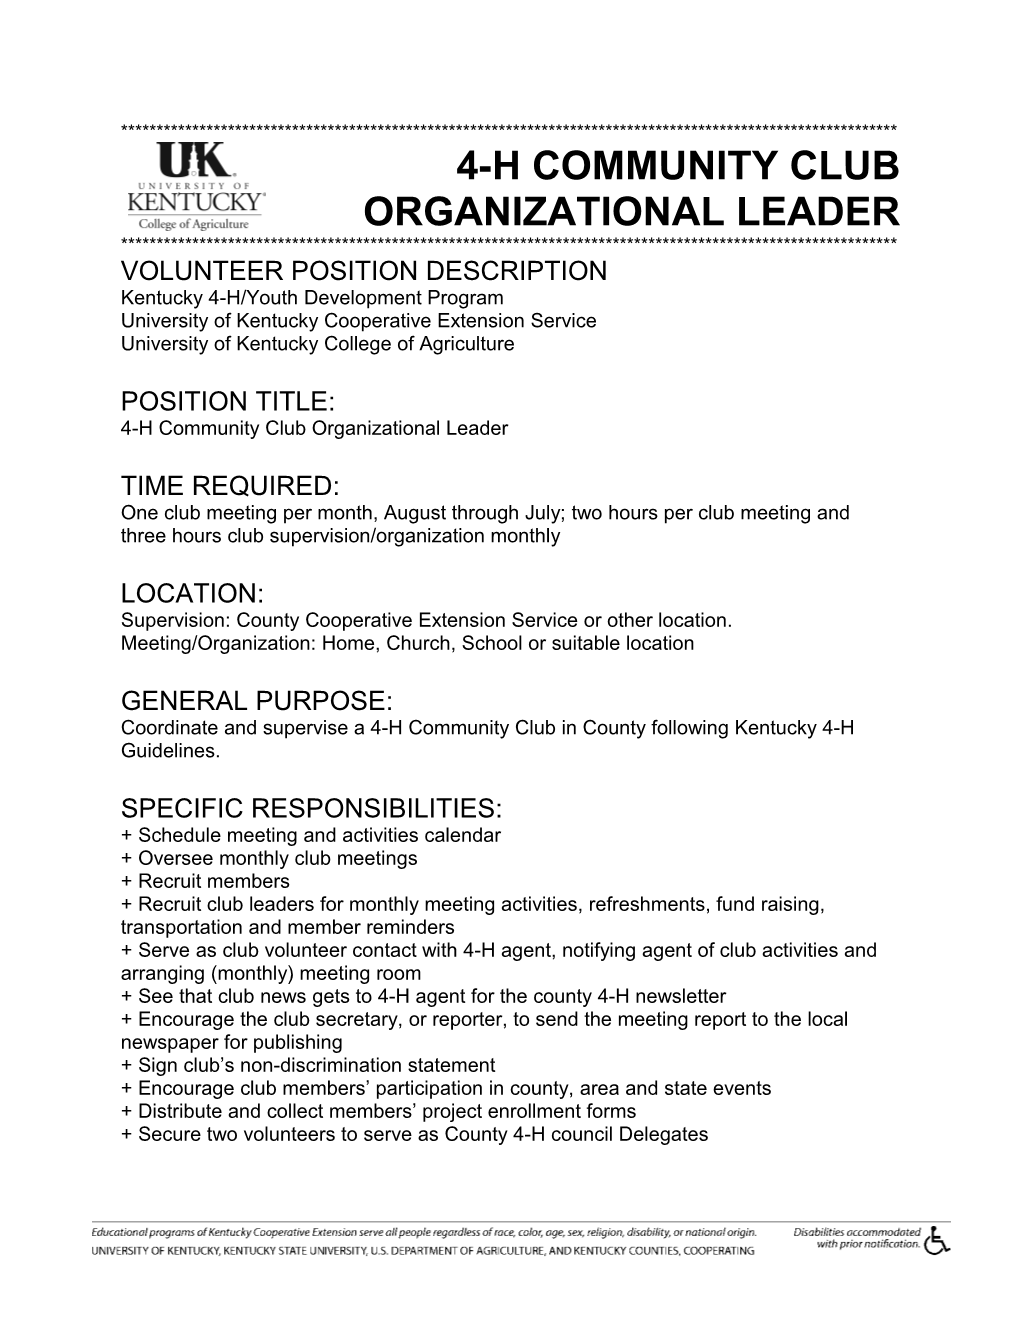 Organizational Leader